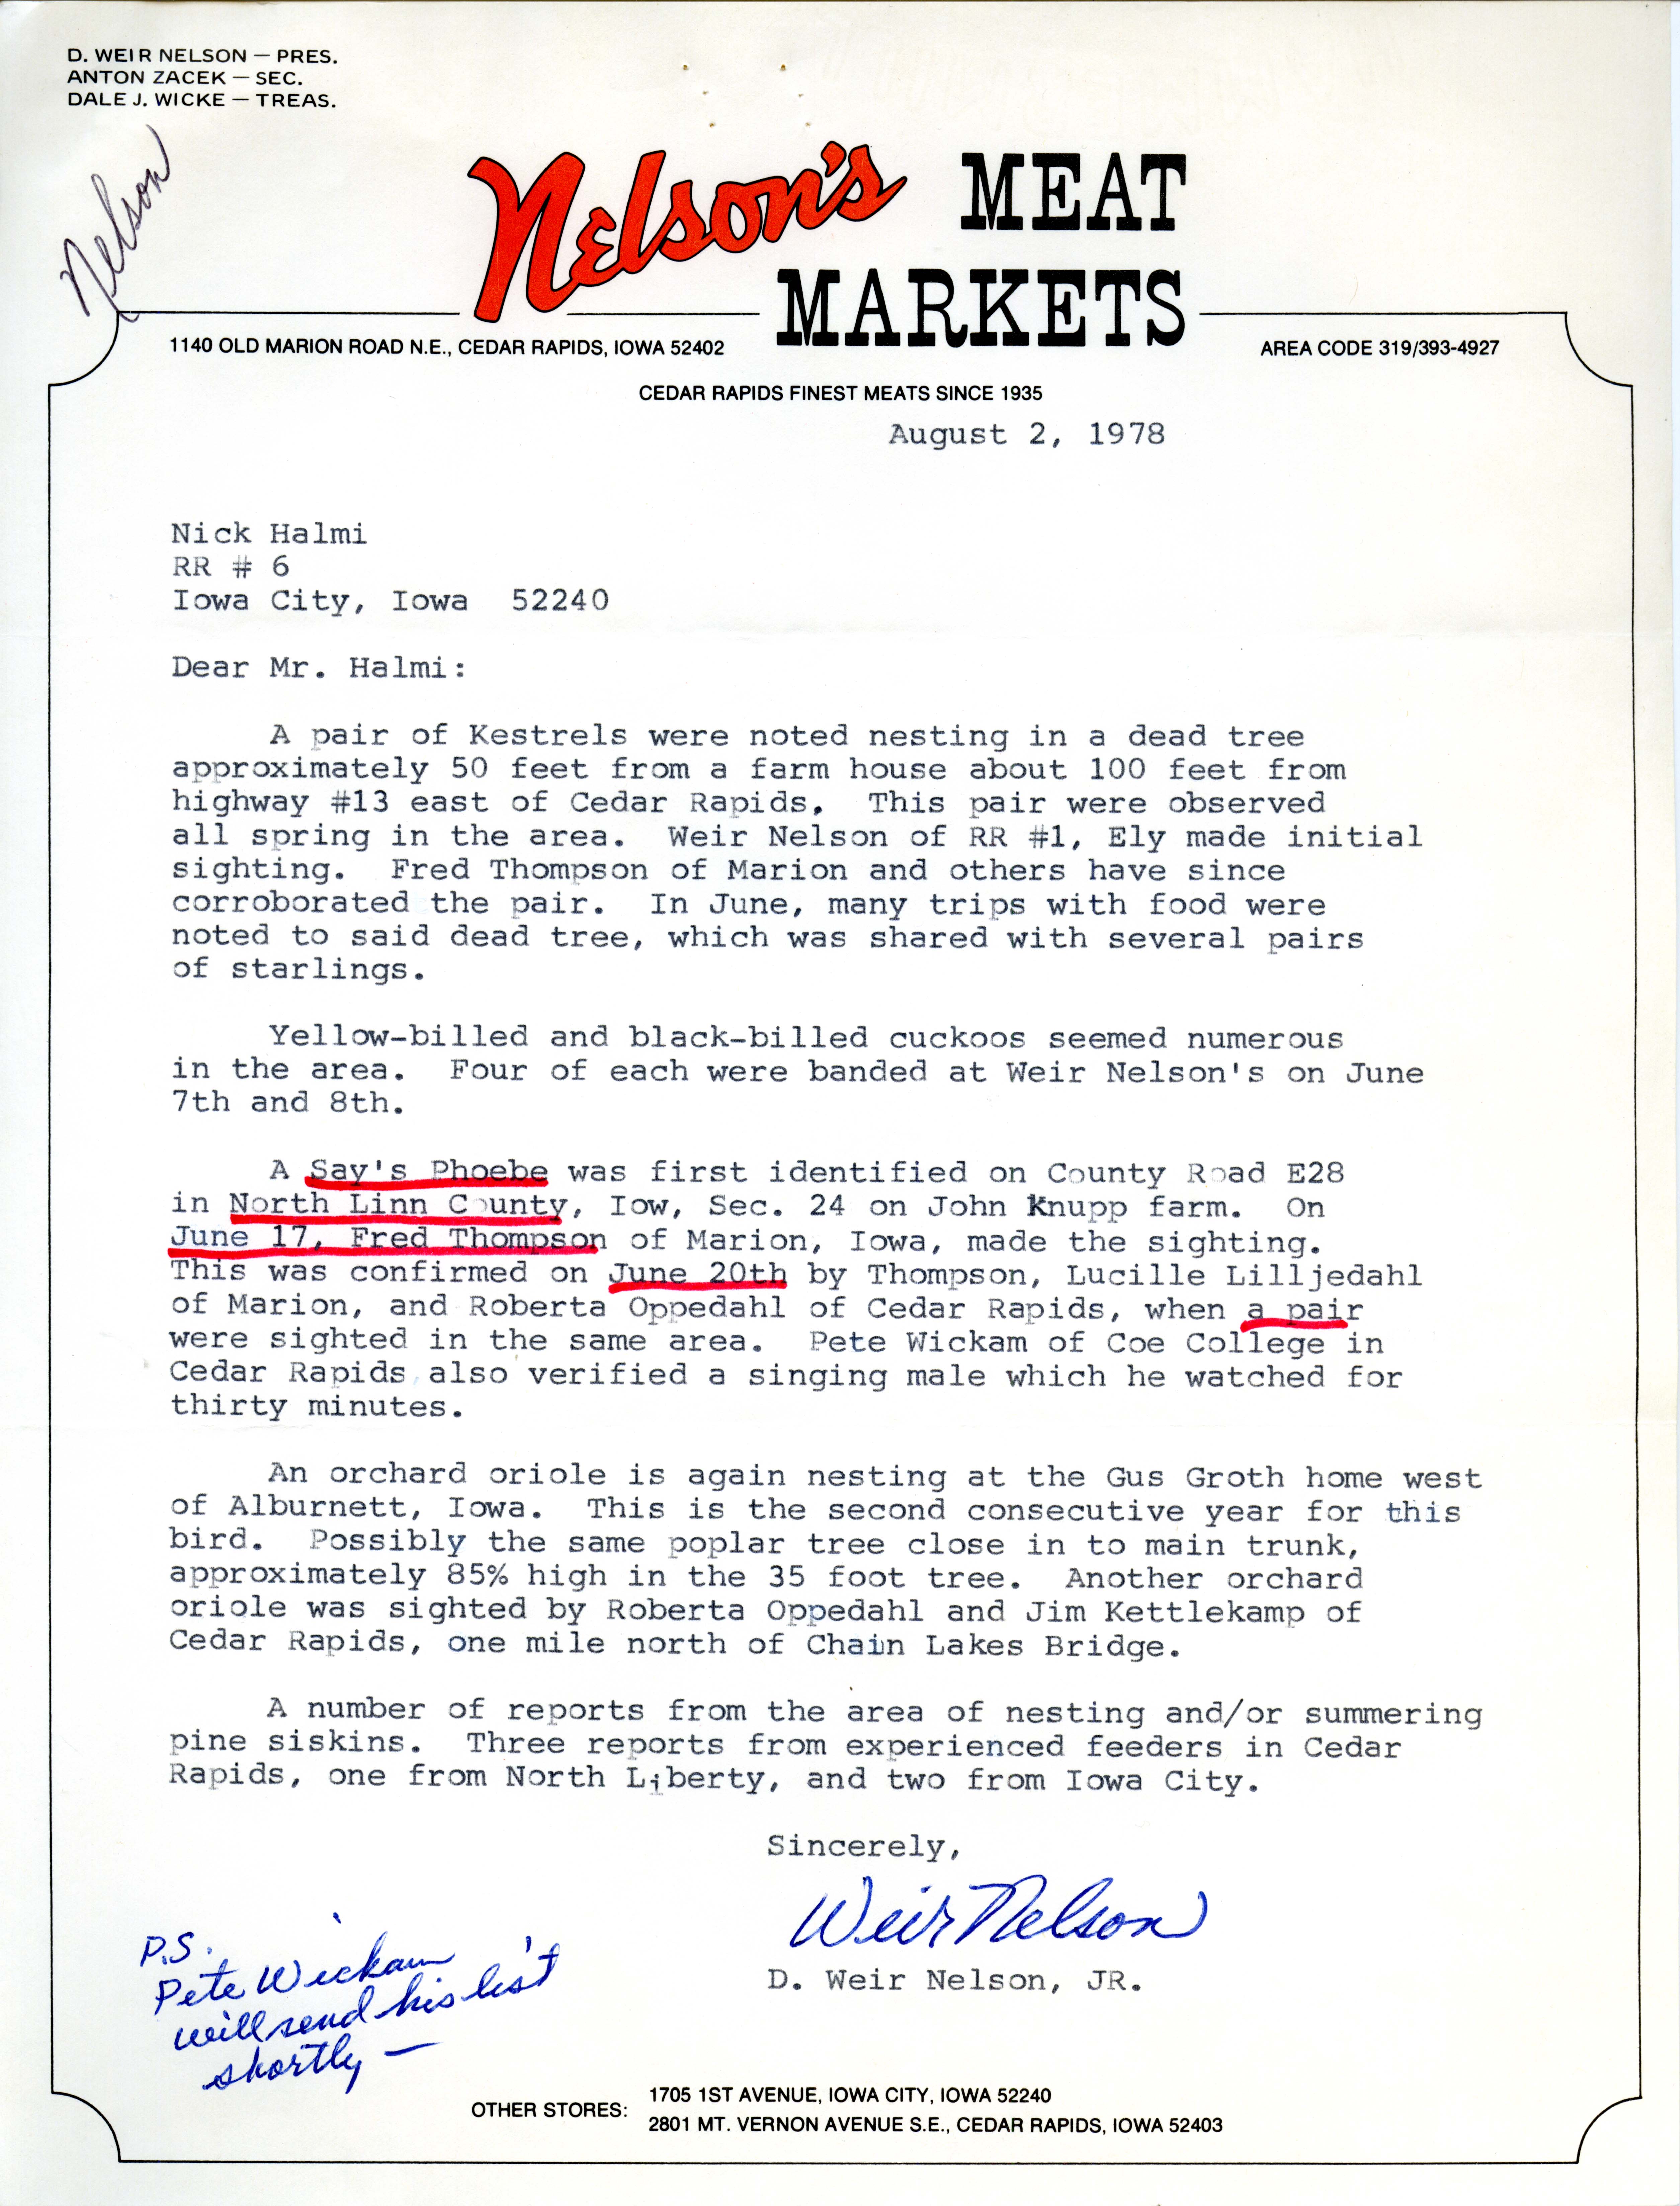 Weir Nelson letter to Nicholas S. Halmi regarding bird sightings, August 2, 1978